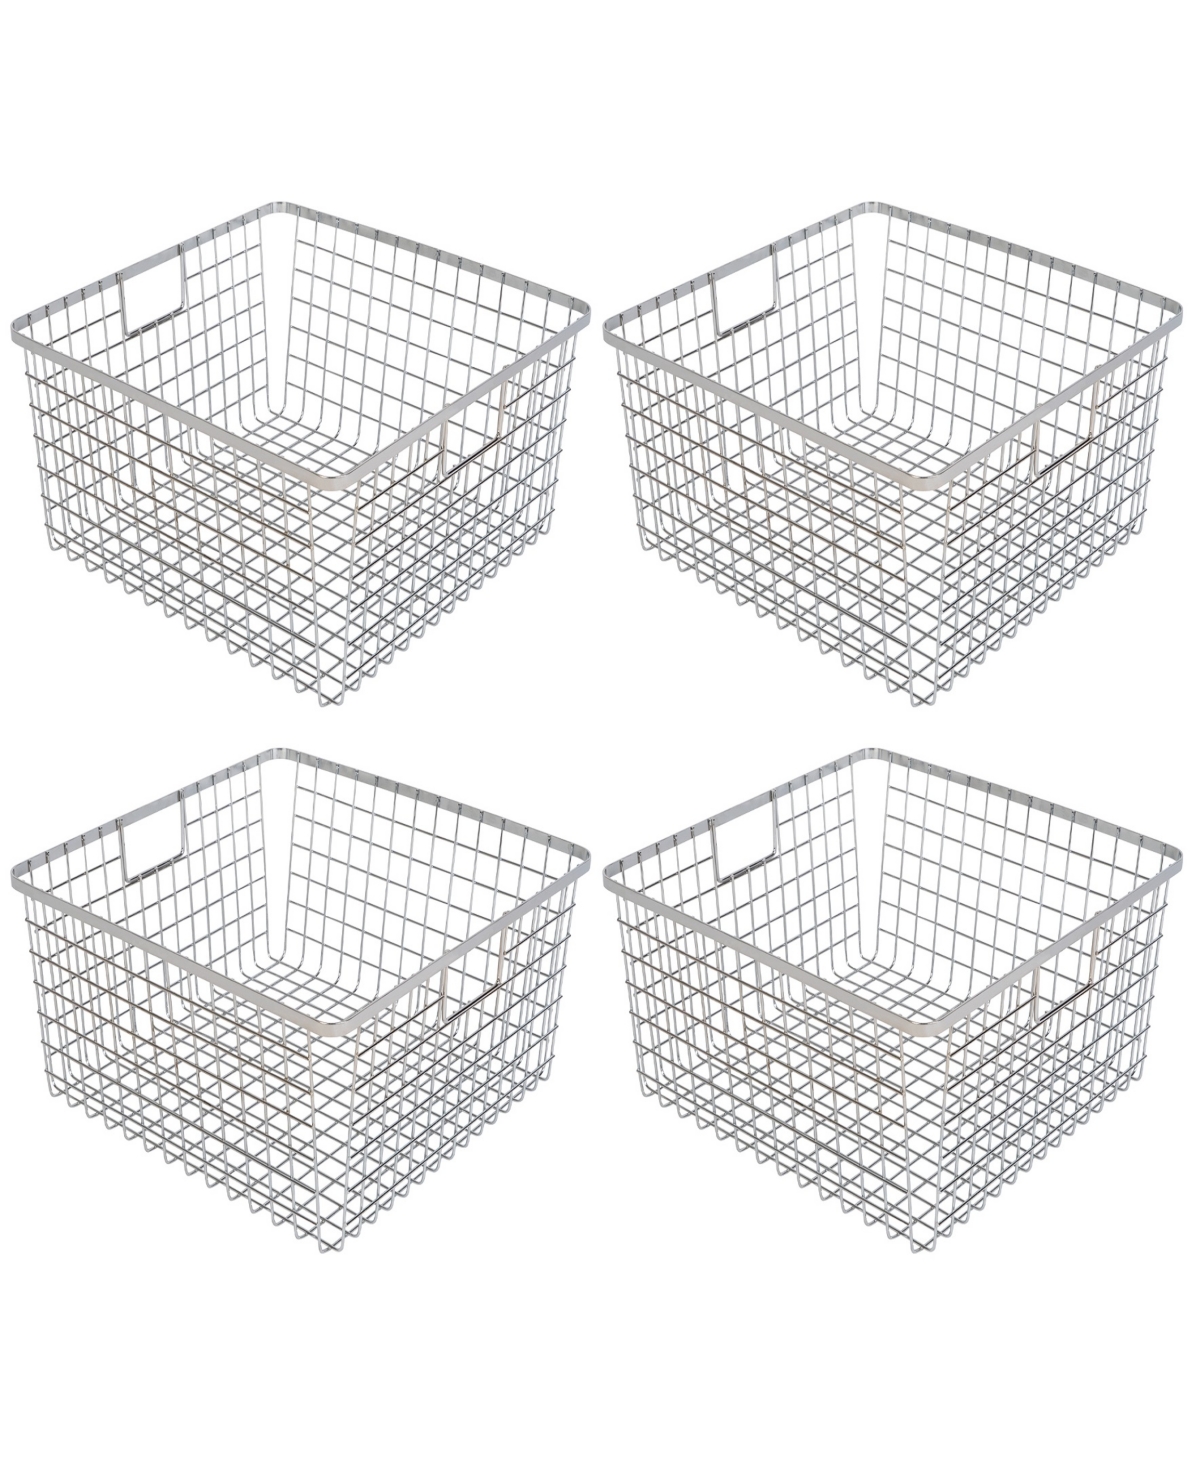 Nestable 9" x 16" x 6" Basket Organizer with Handles, Set of 4 - Chrome